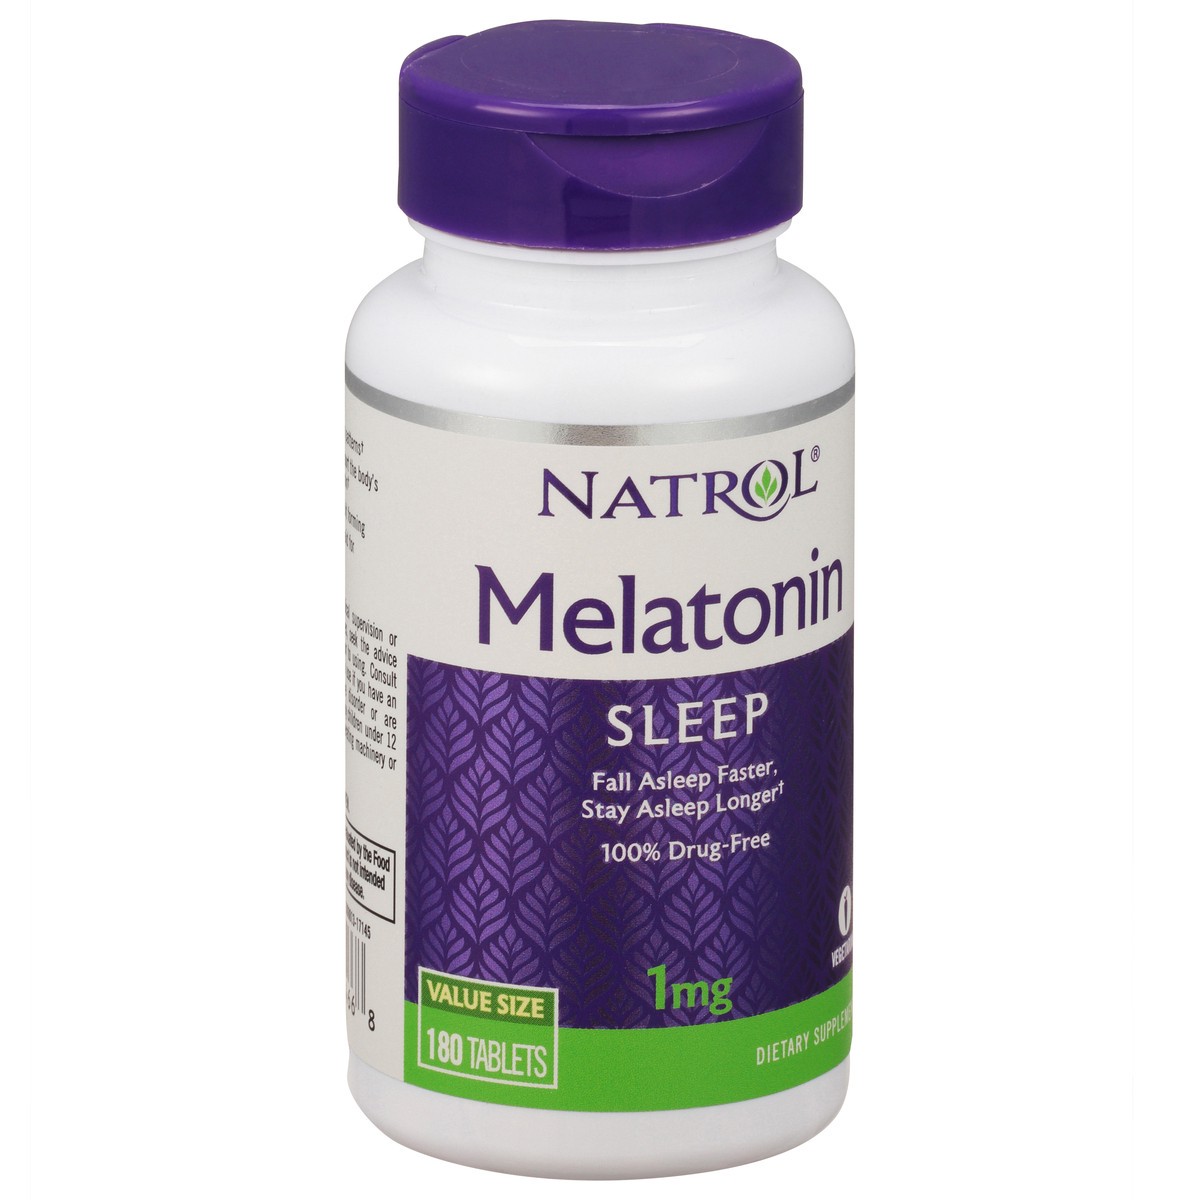 slide 9 of 14, Natrol 1mg Melatonin Sleep Aid Tablets, Fall Asleep Faster, Stay Asleep Longer, Dietary Supplement, 180 Count, 180 ct